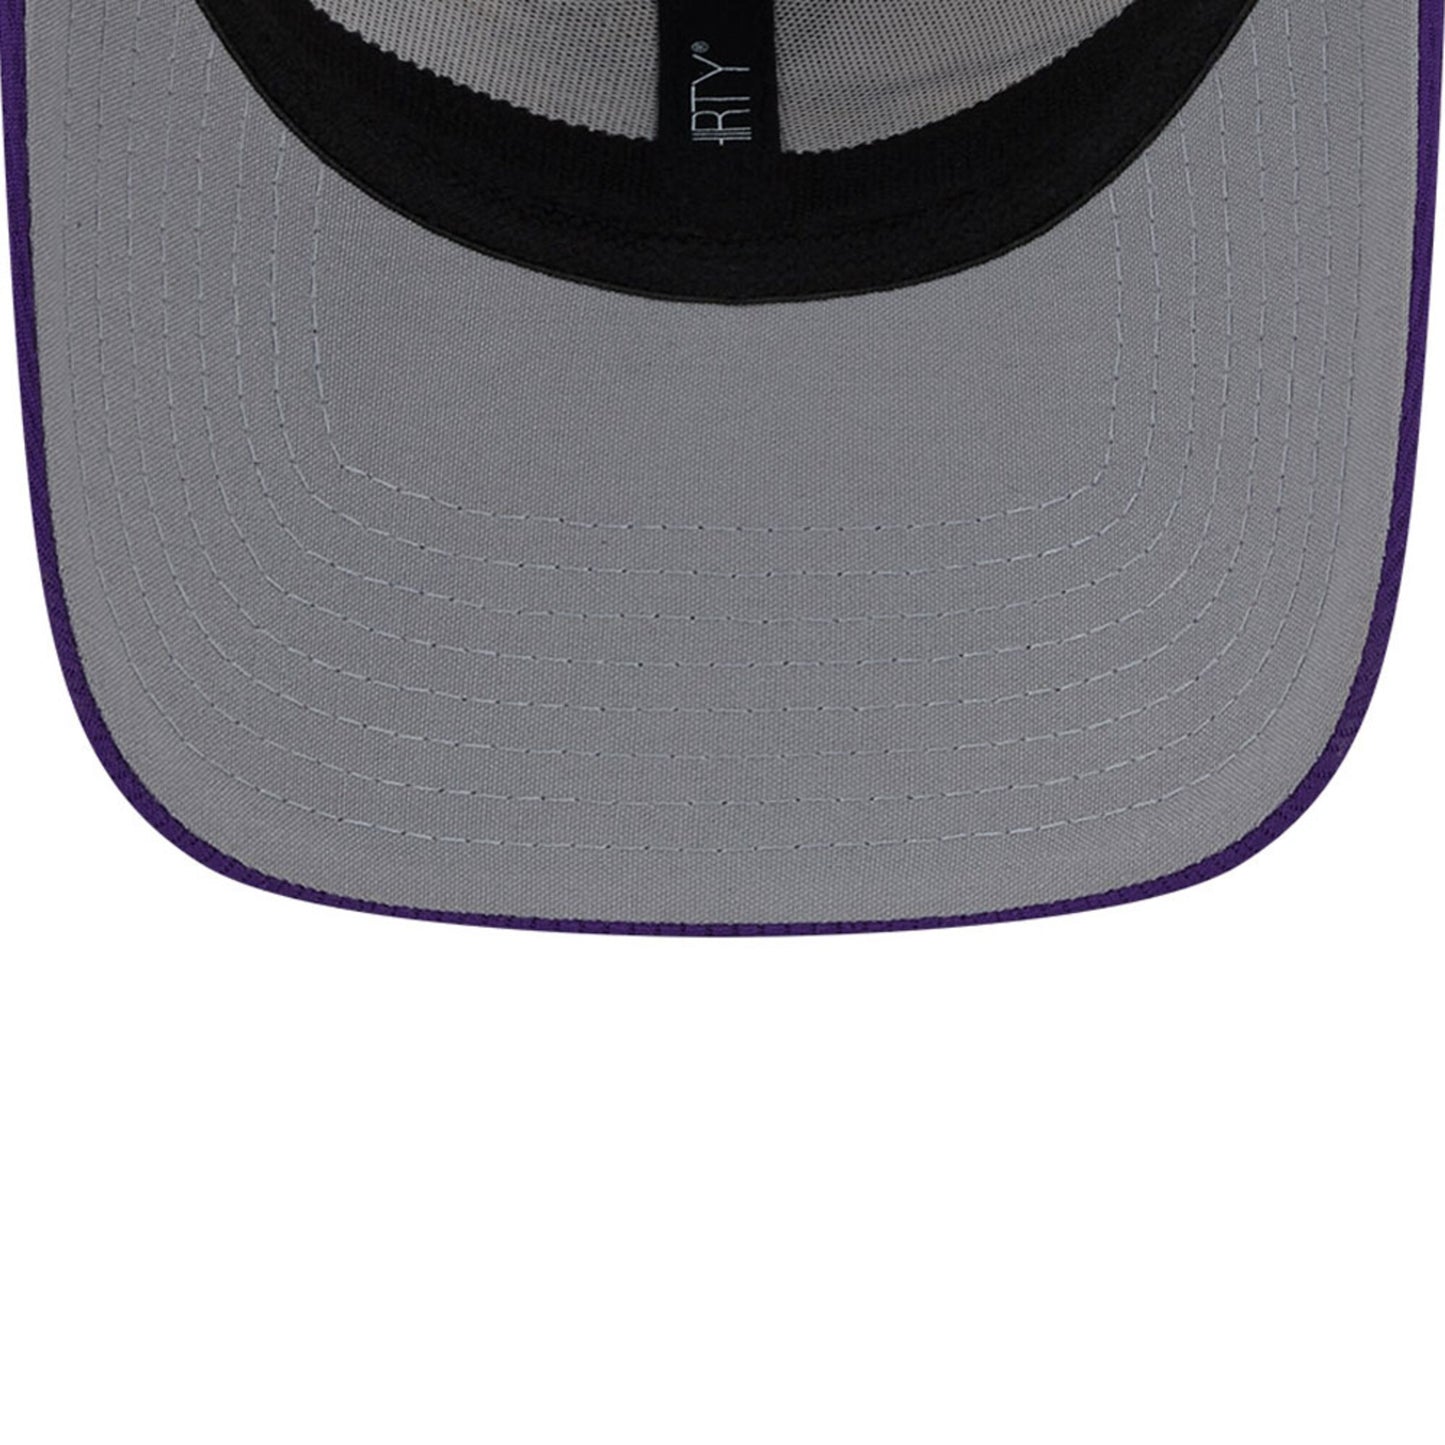 Men's Minnesota Vikings Primary Logo New Era White/Purple 2023 Sideline 39THIRTY Flex Hat